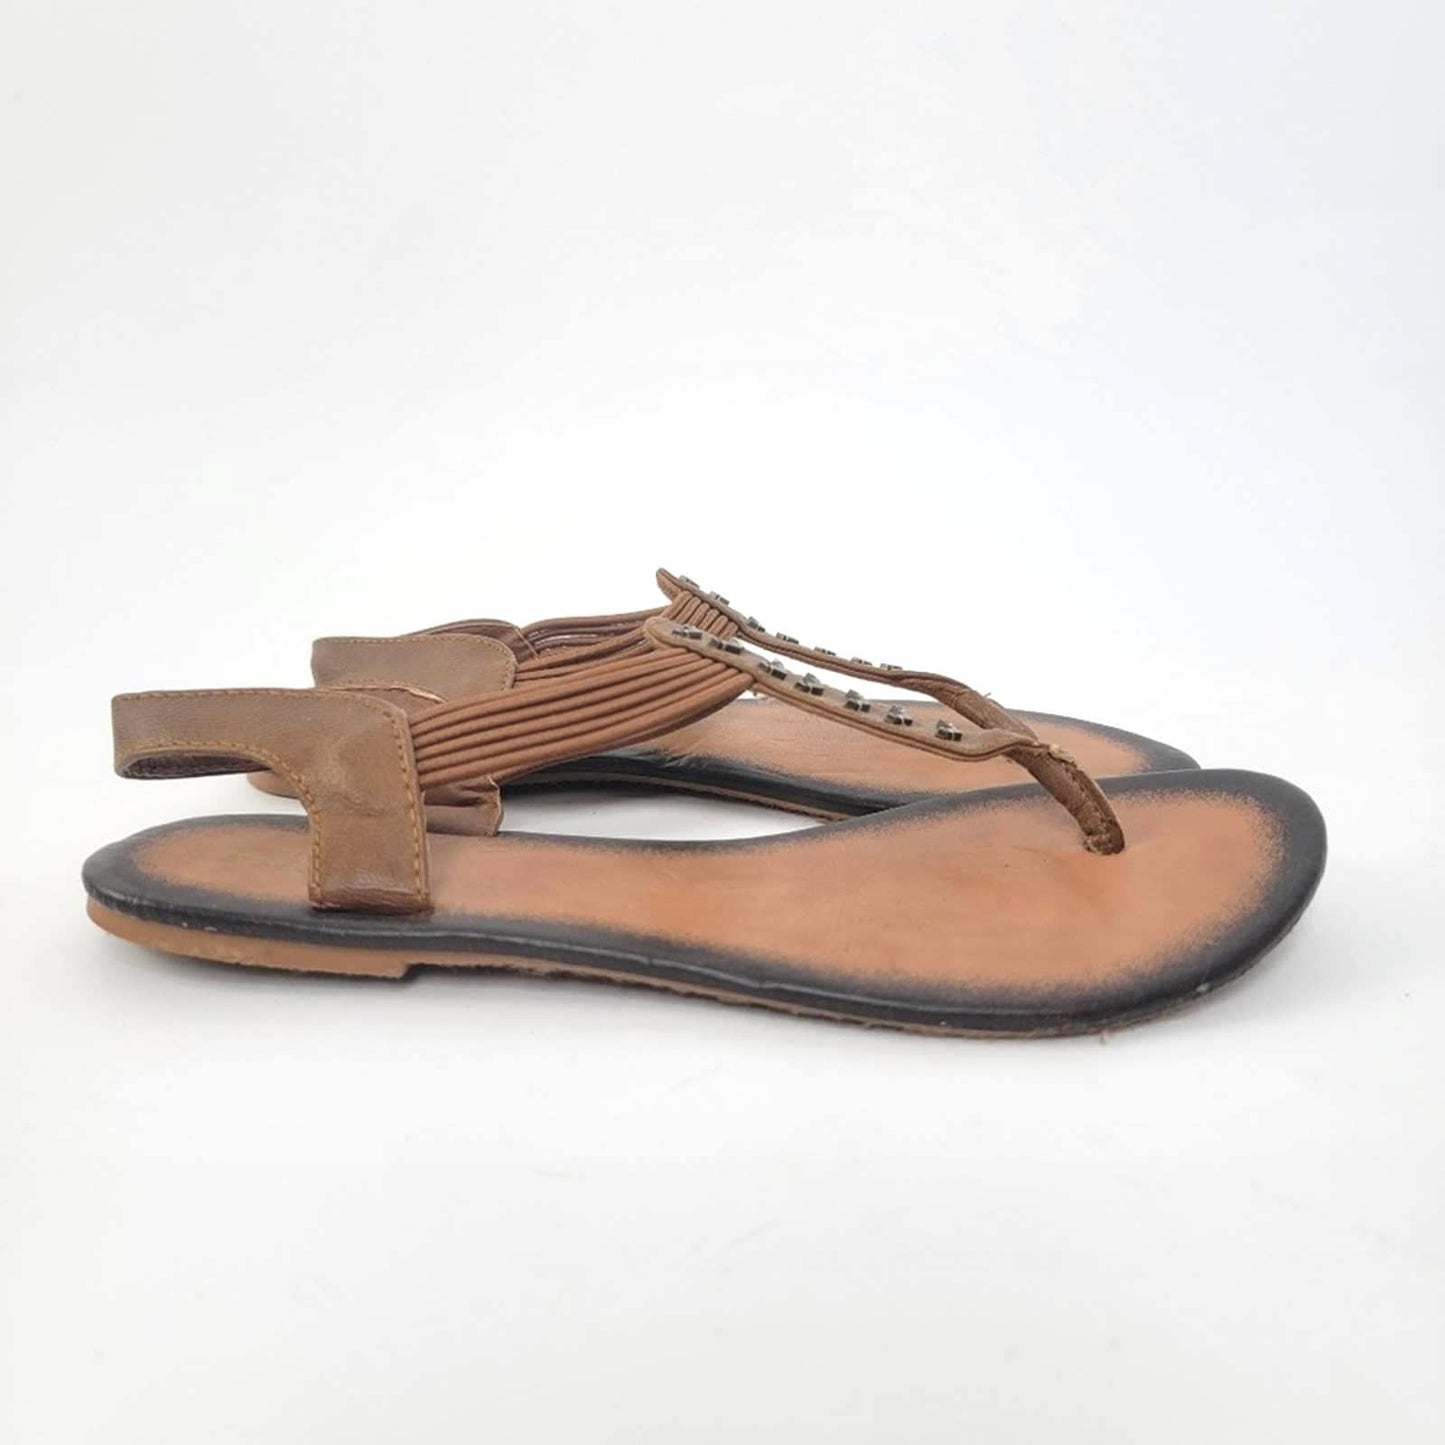 Mudd T-Strap Women's Thong Sandals - 7